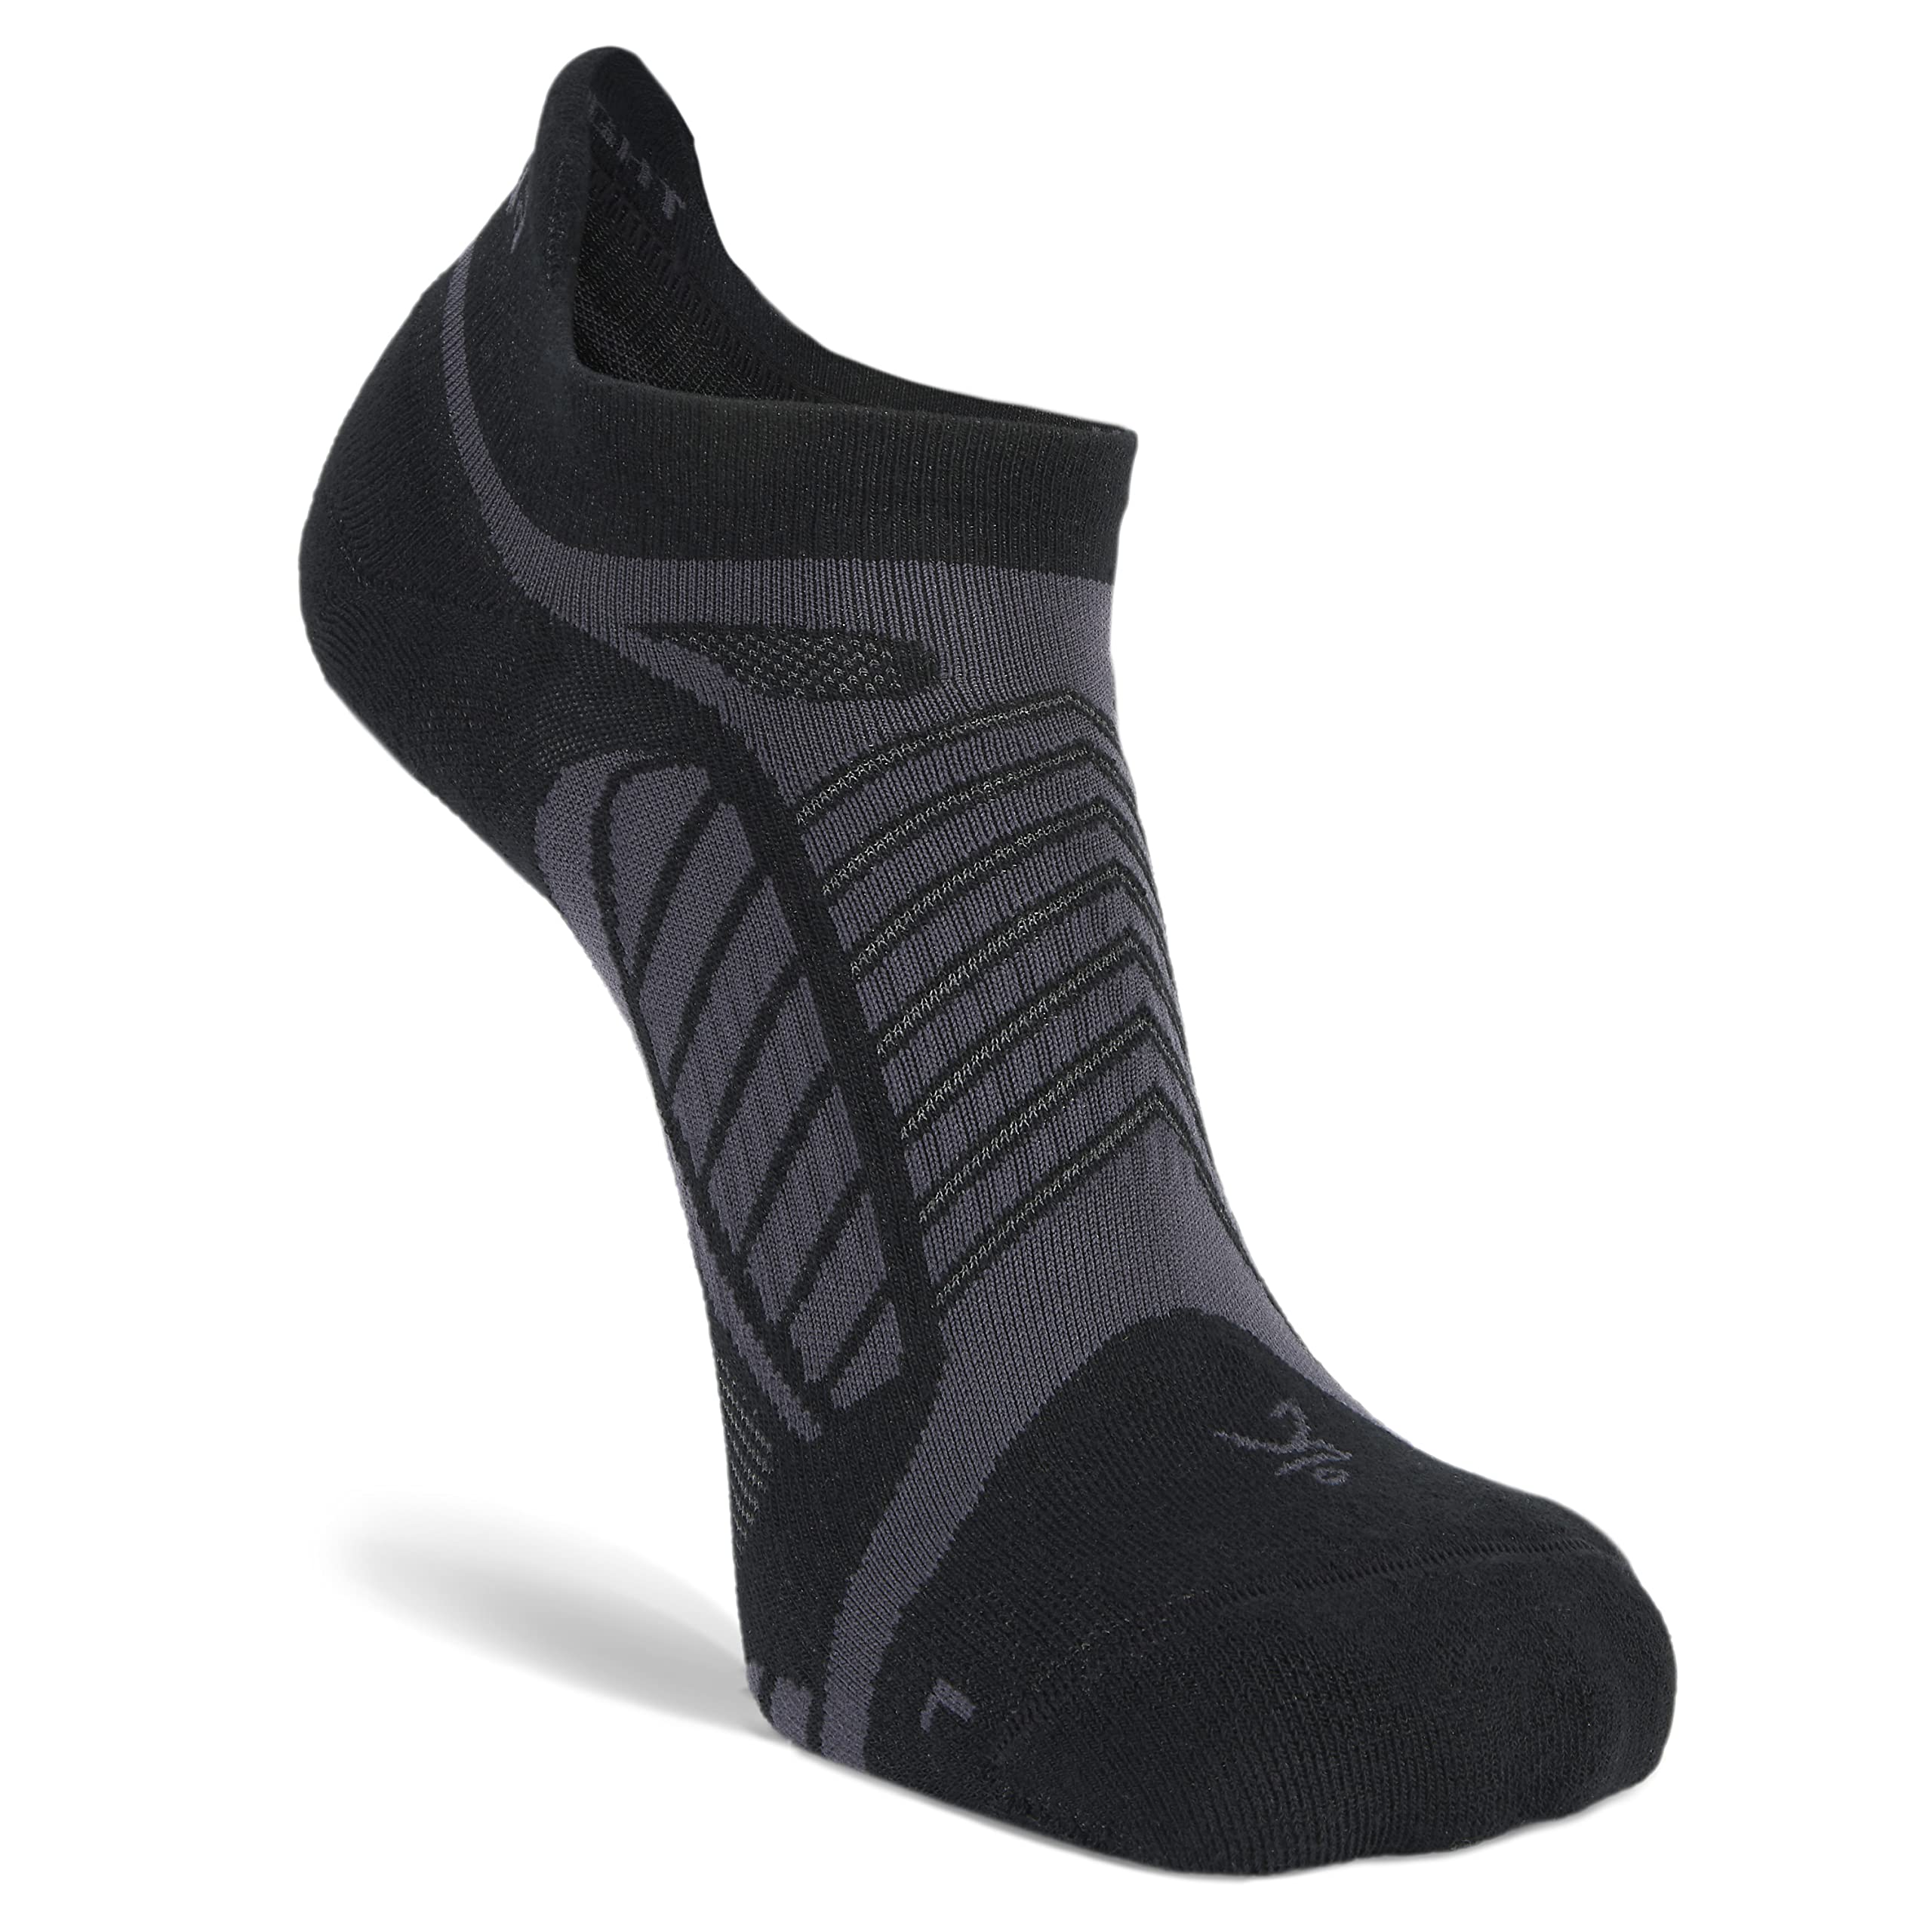 Balega Ultralight Lightweight Performance No Show Athletic Running Socks for Men and Women (1 Pair) $10.56